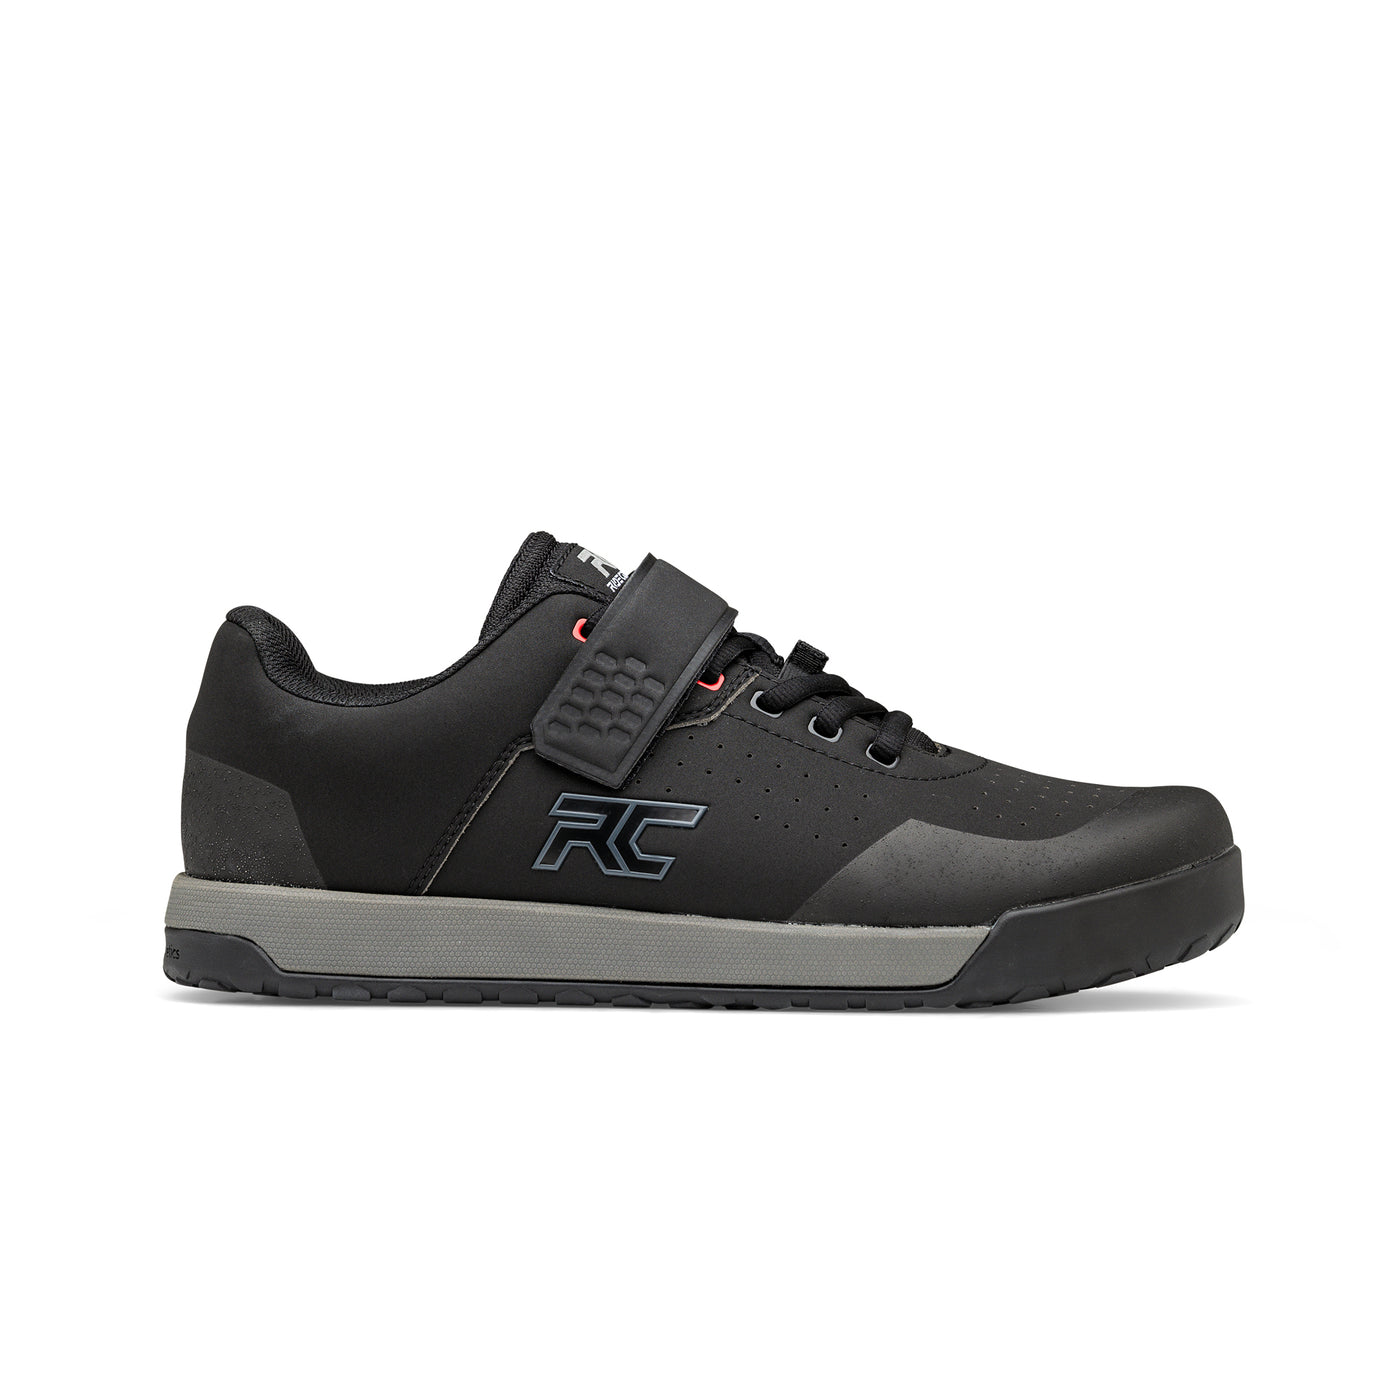 Ride Concepts Men's Hellion Clip MTB Shoe - Black and Charcoal